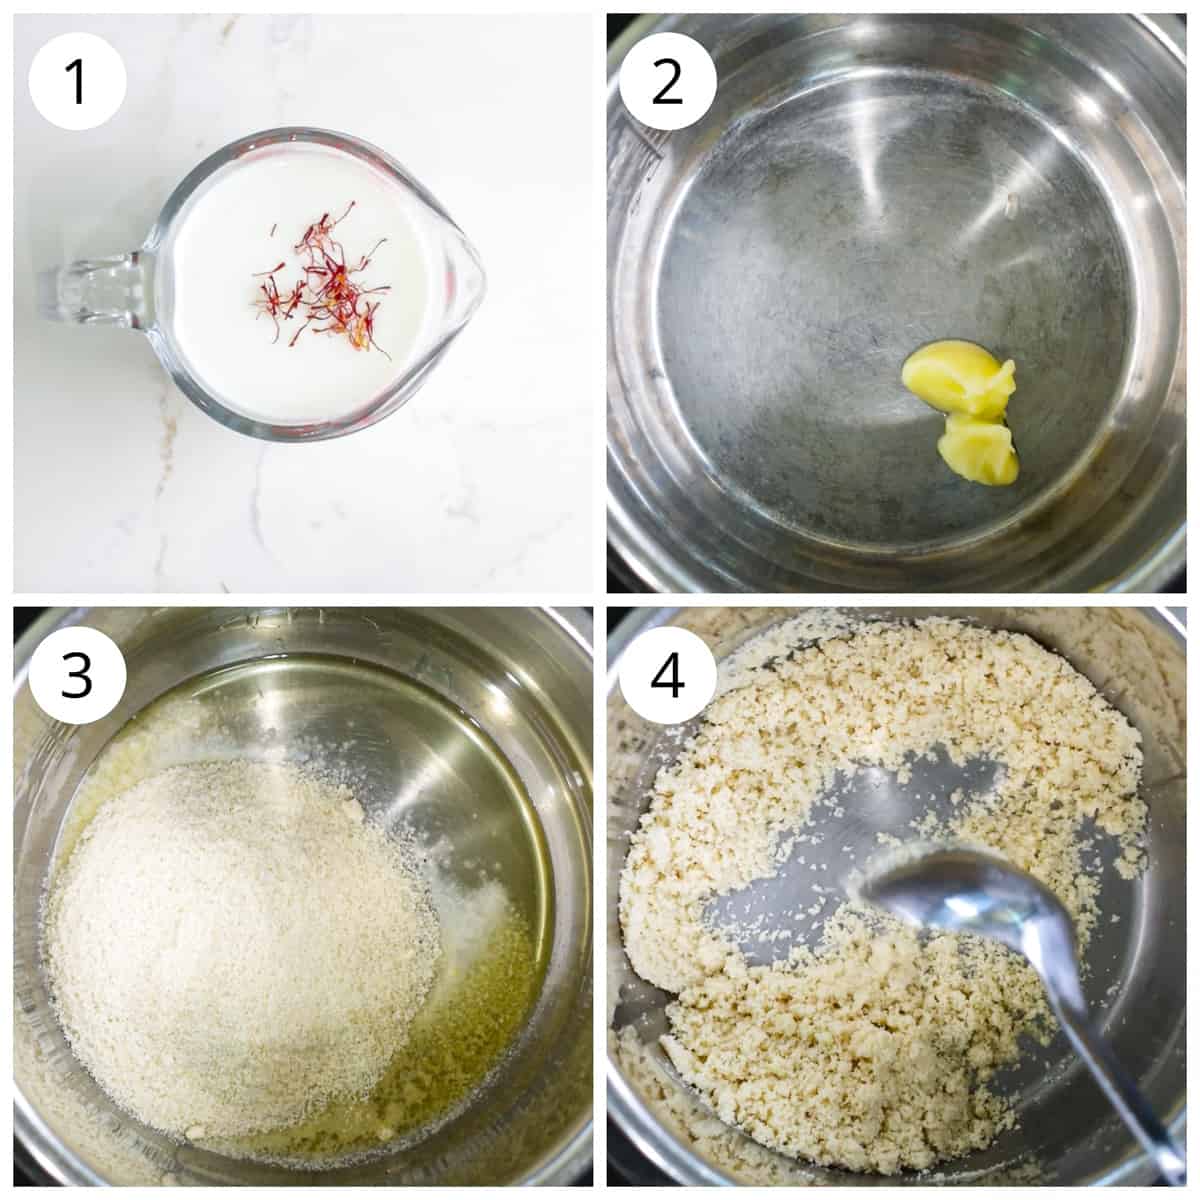 steps for roasting Almond flour in ghee for badam halwa